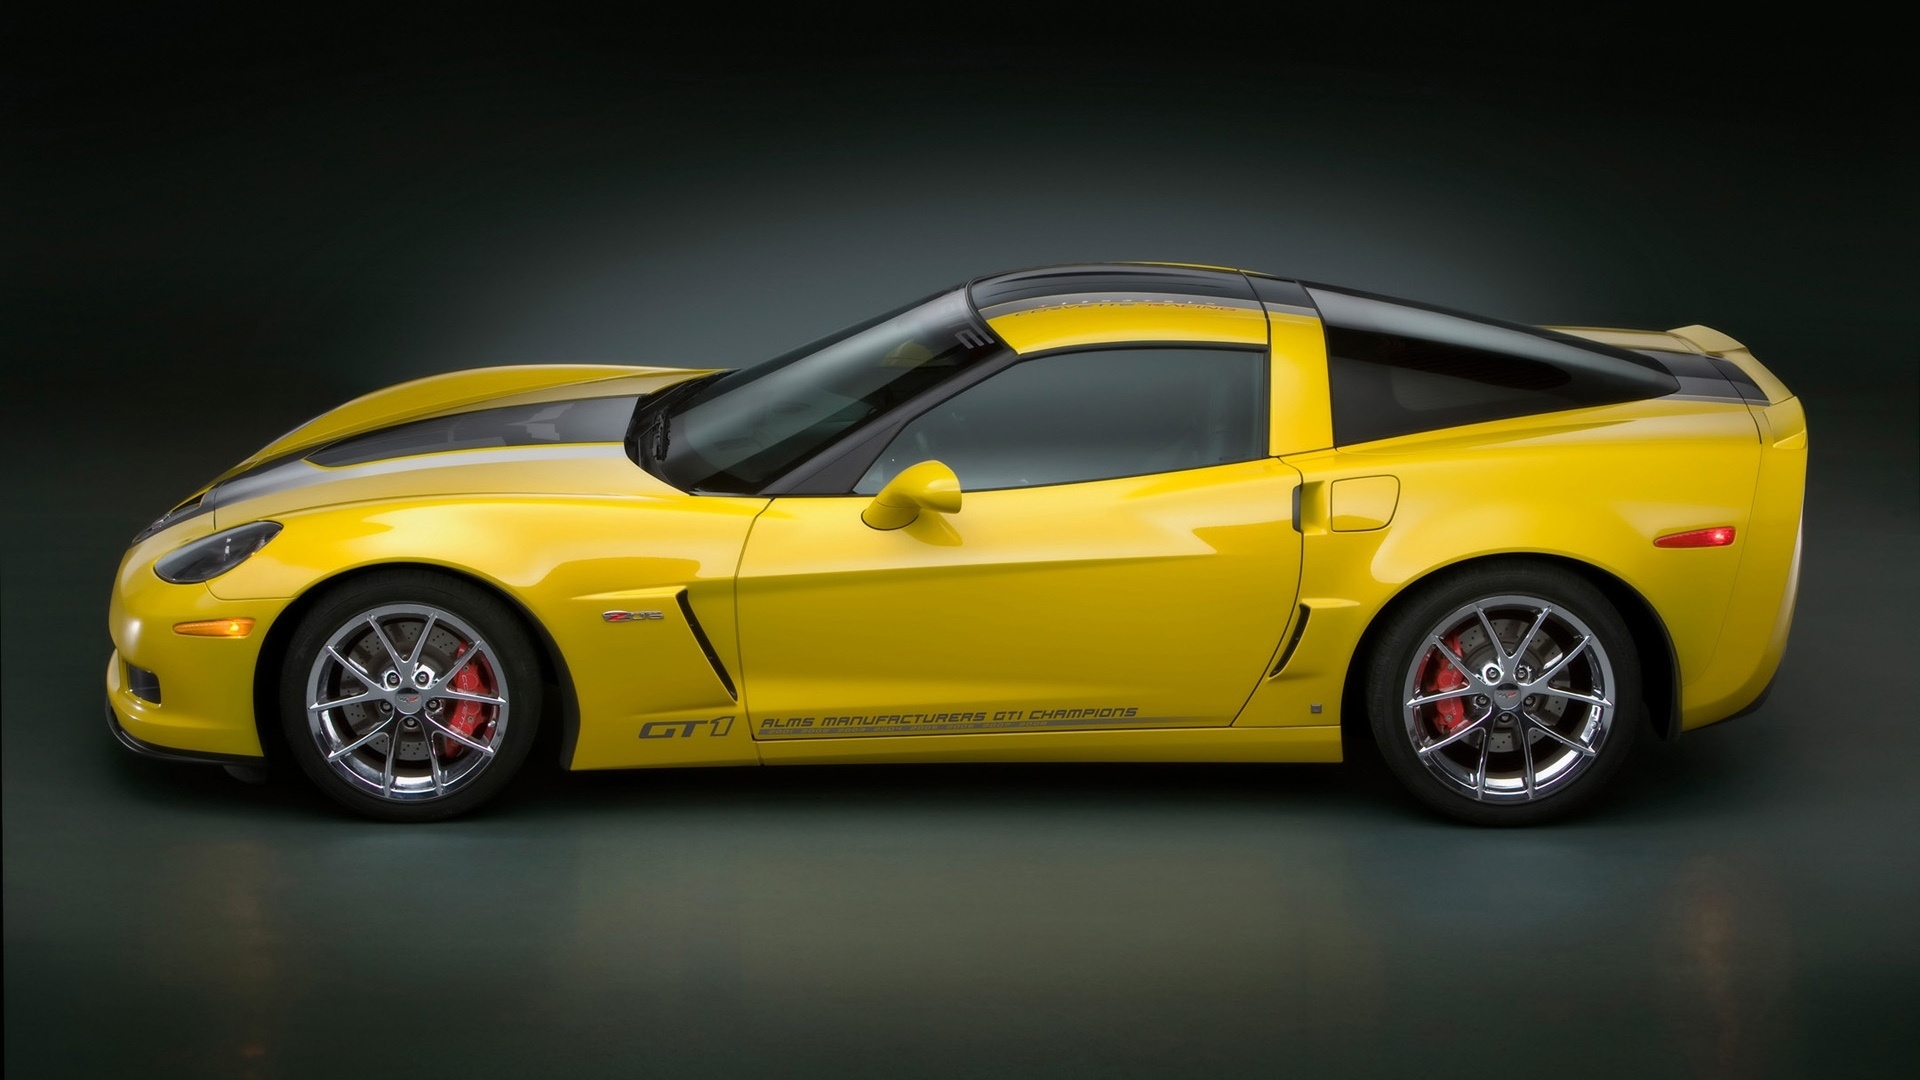 Corvette GT1 Championship Edition Side 2009 for 1920 x 1080 HDTV 1080p resolution